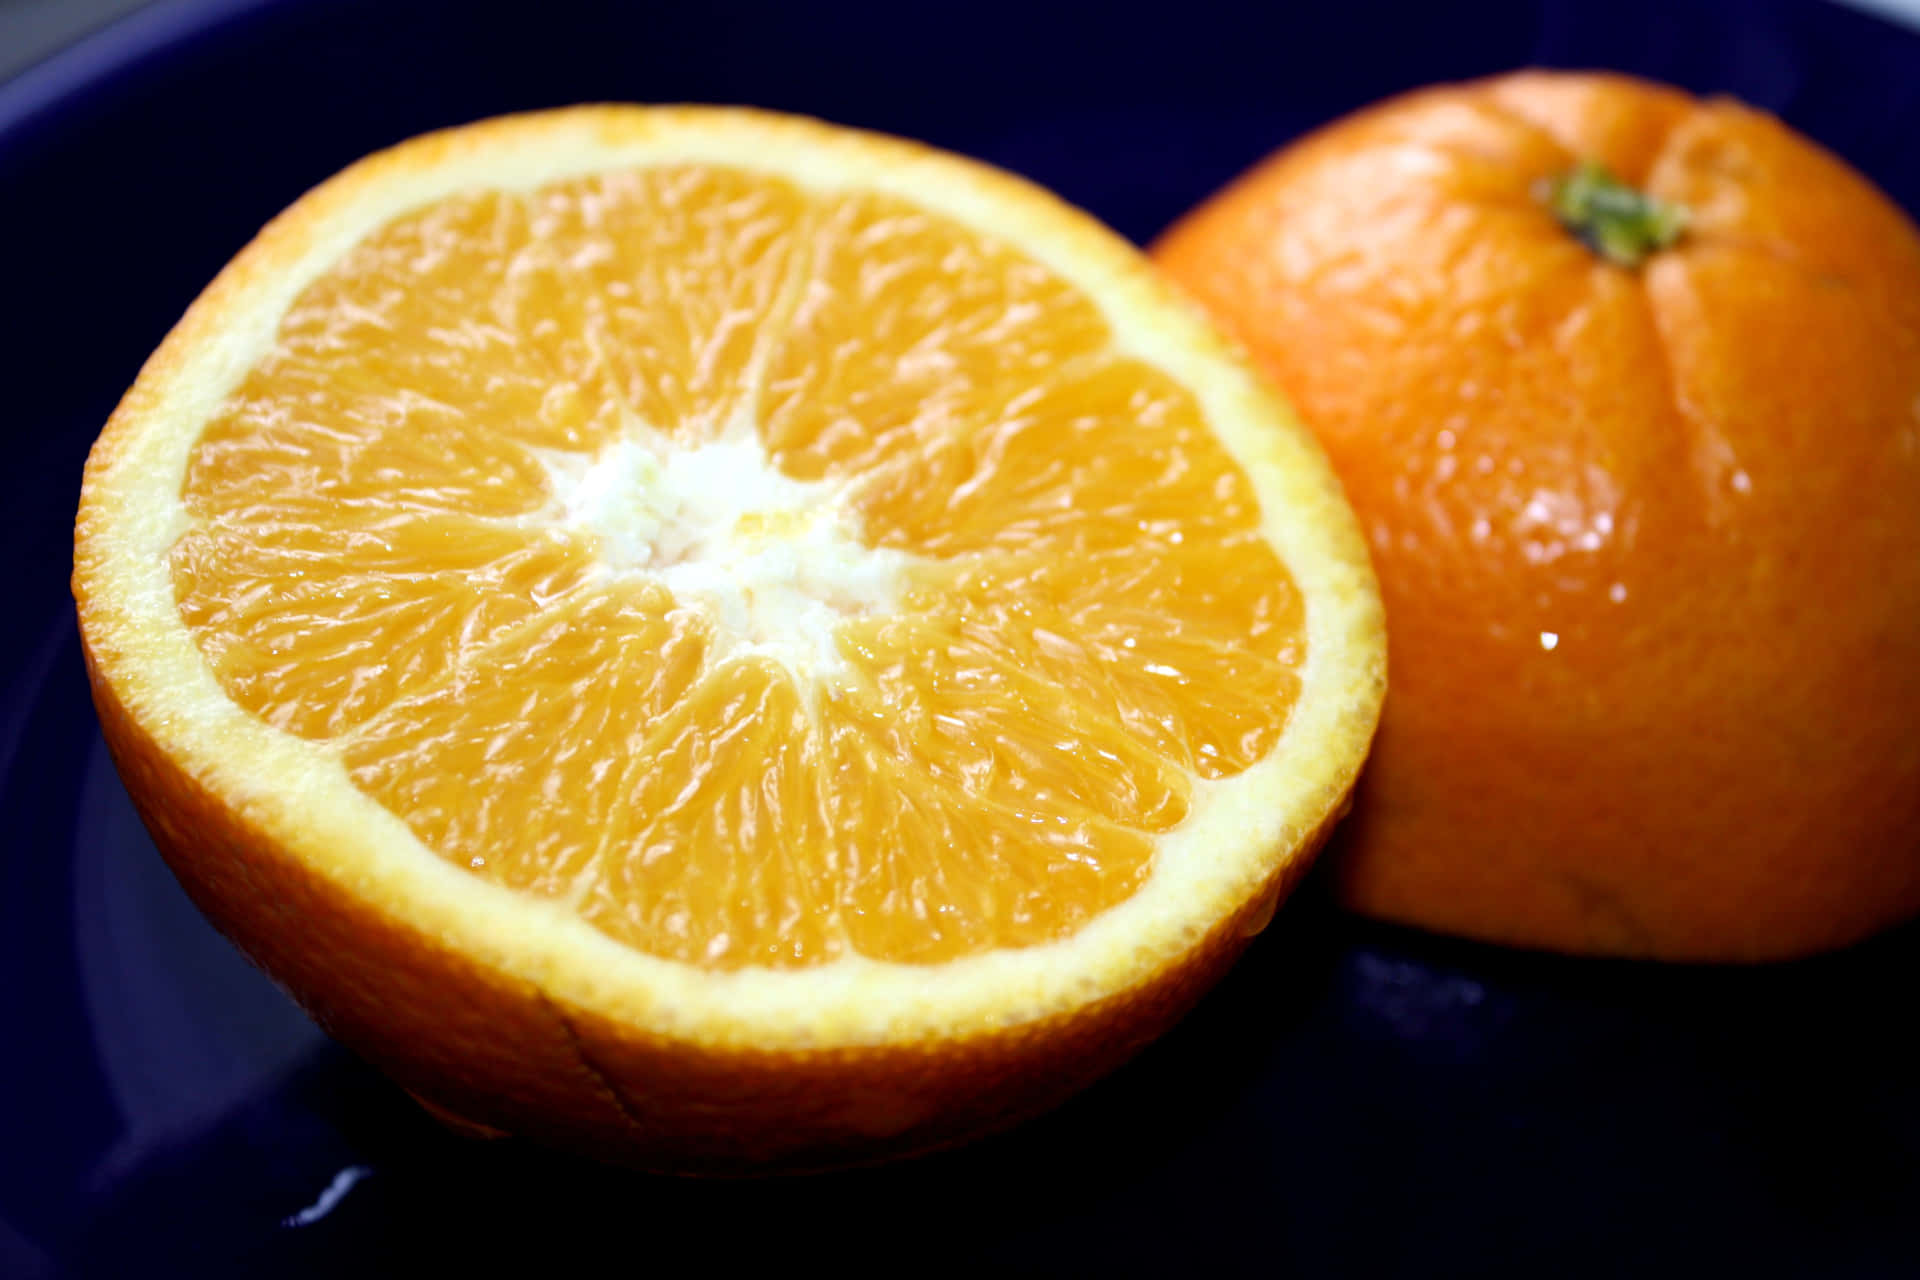 Brillantey Audaz Naranja.